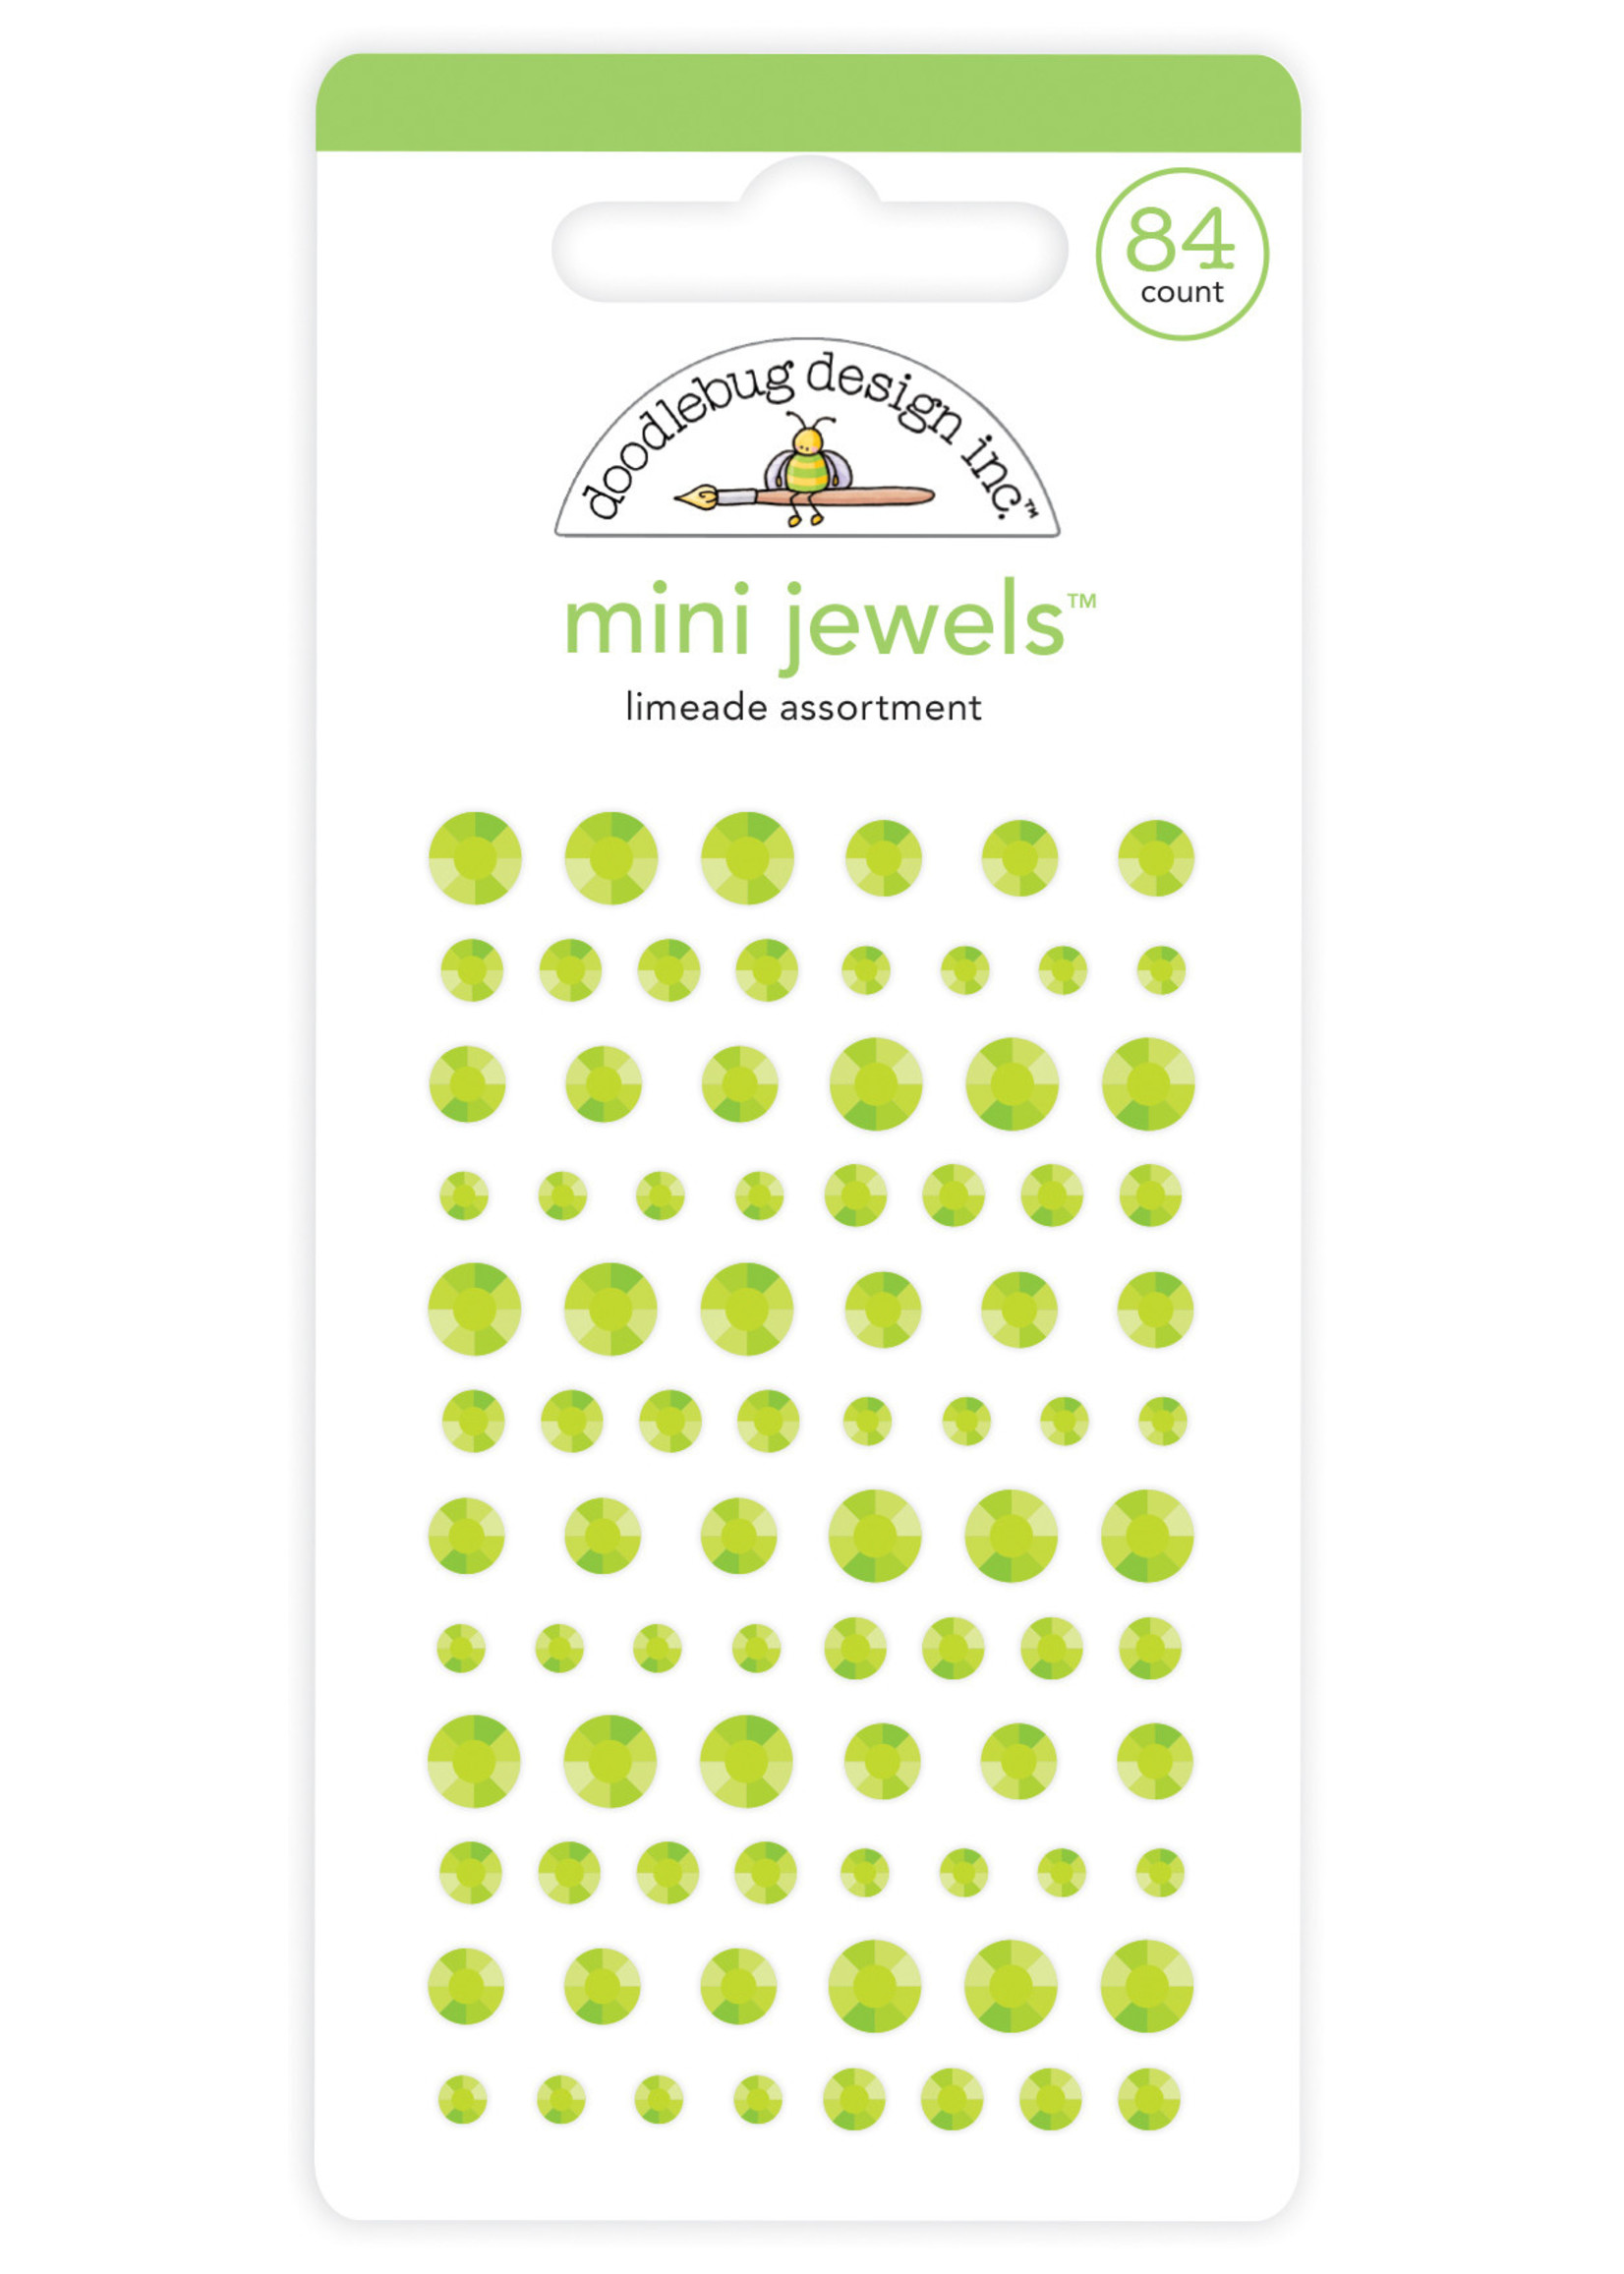 DOODLEBUG Doodlebug limeade mini jewels